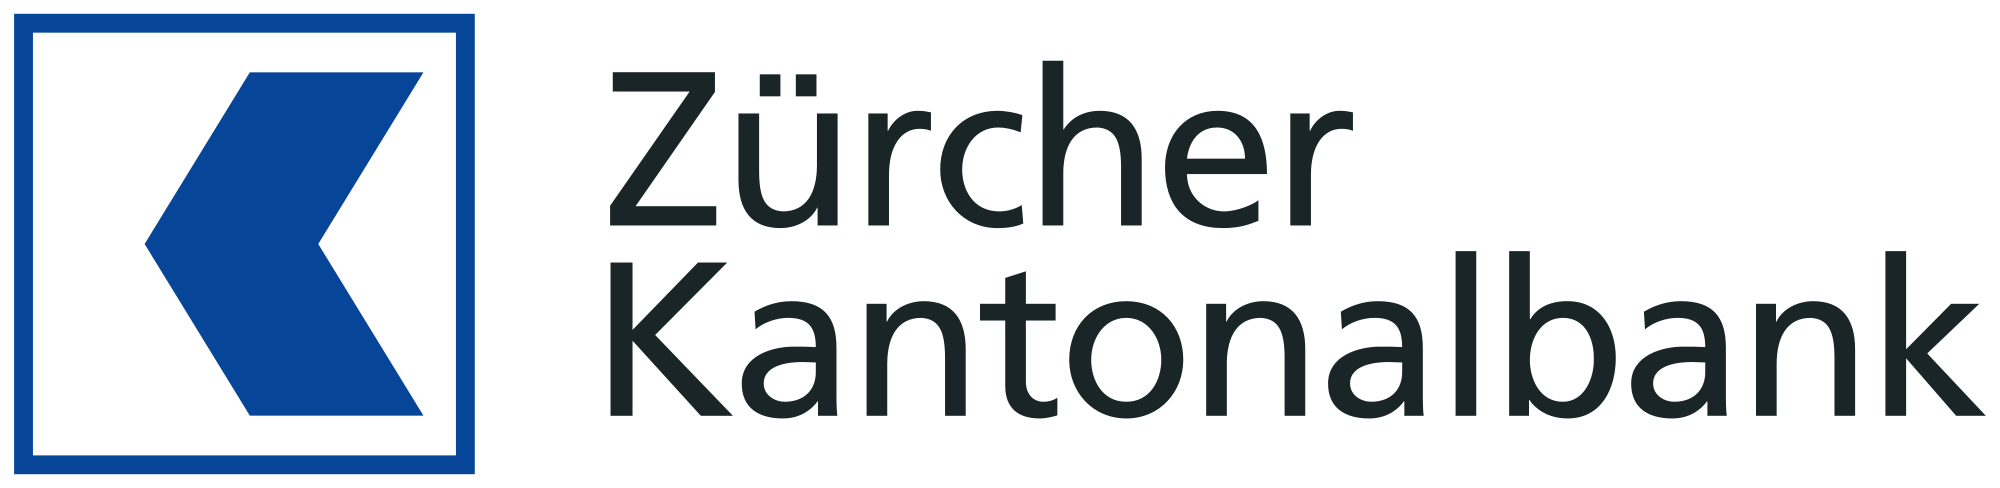 Zürcher_Kantonalbank_logo